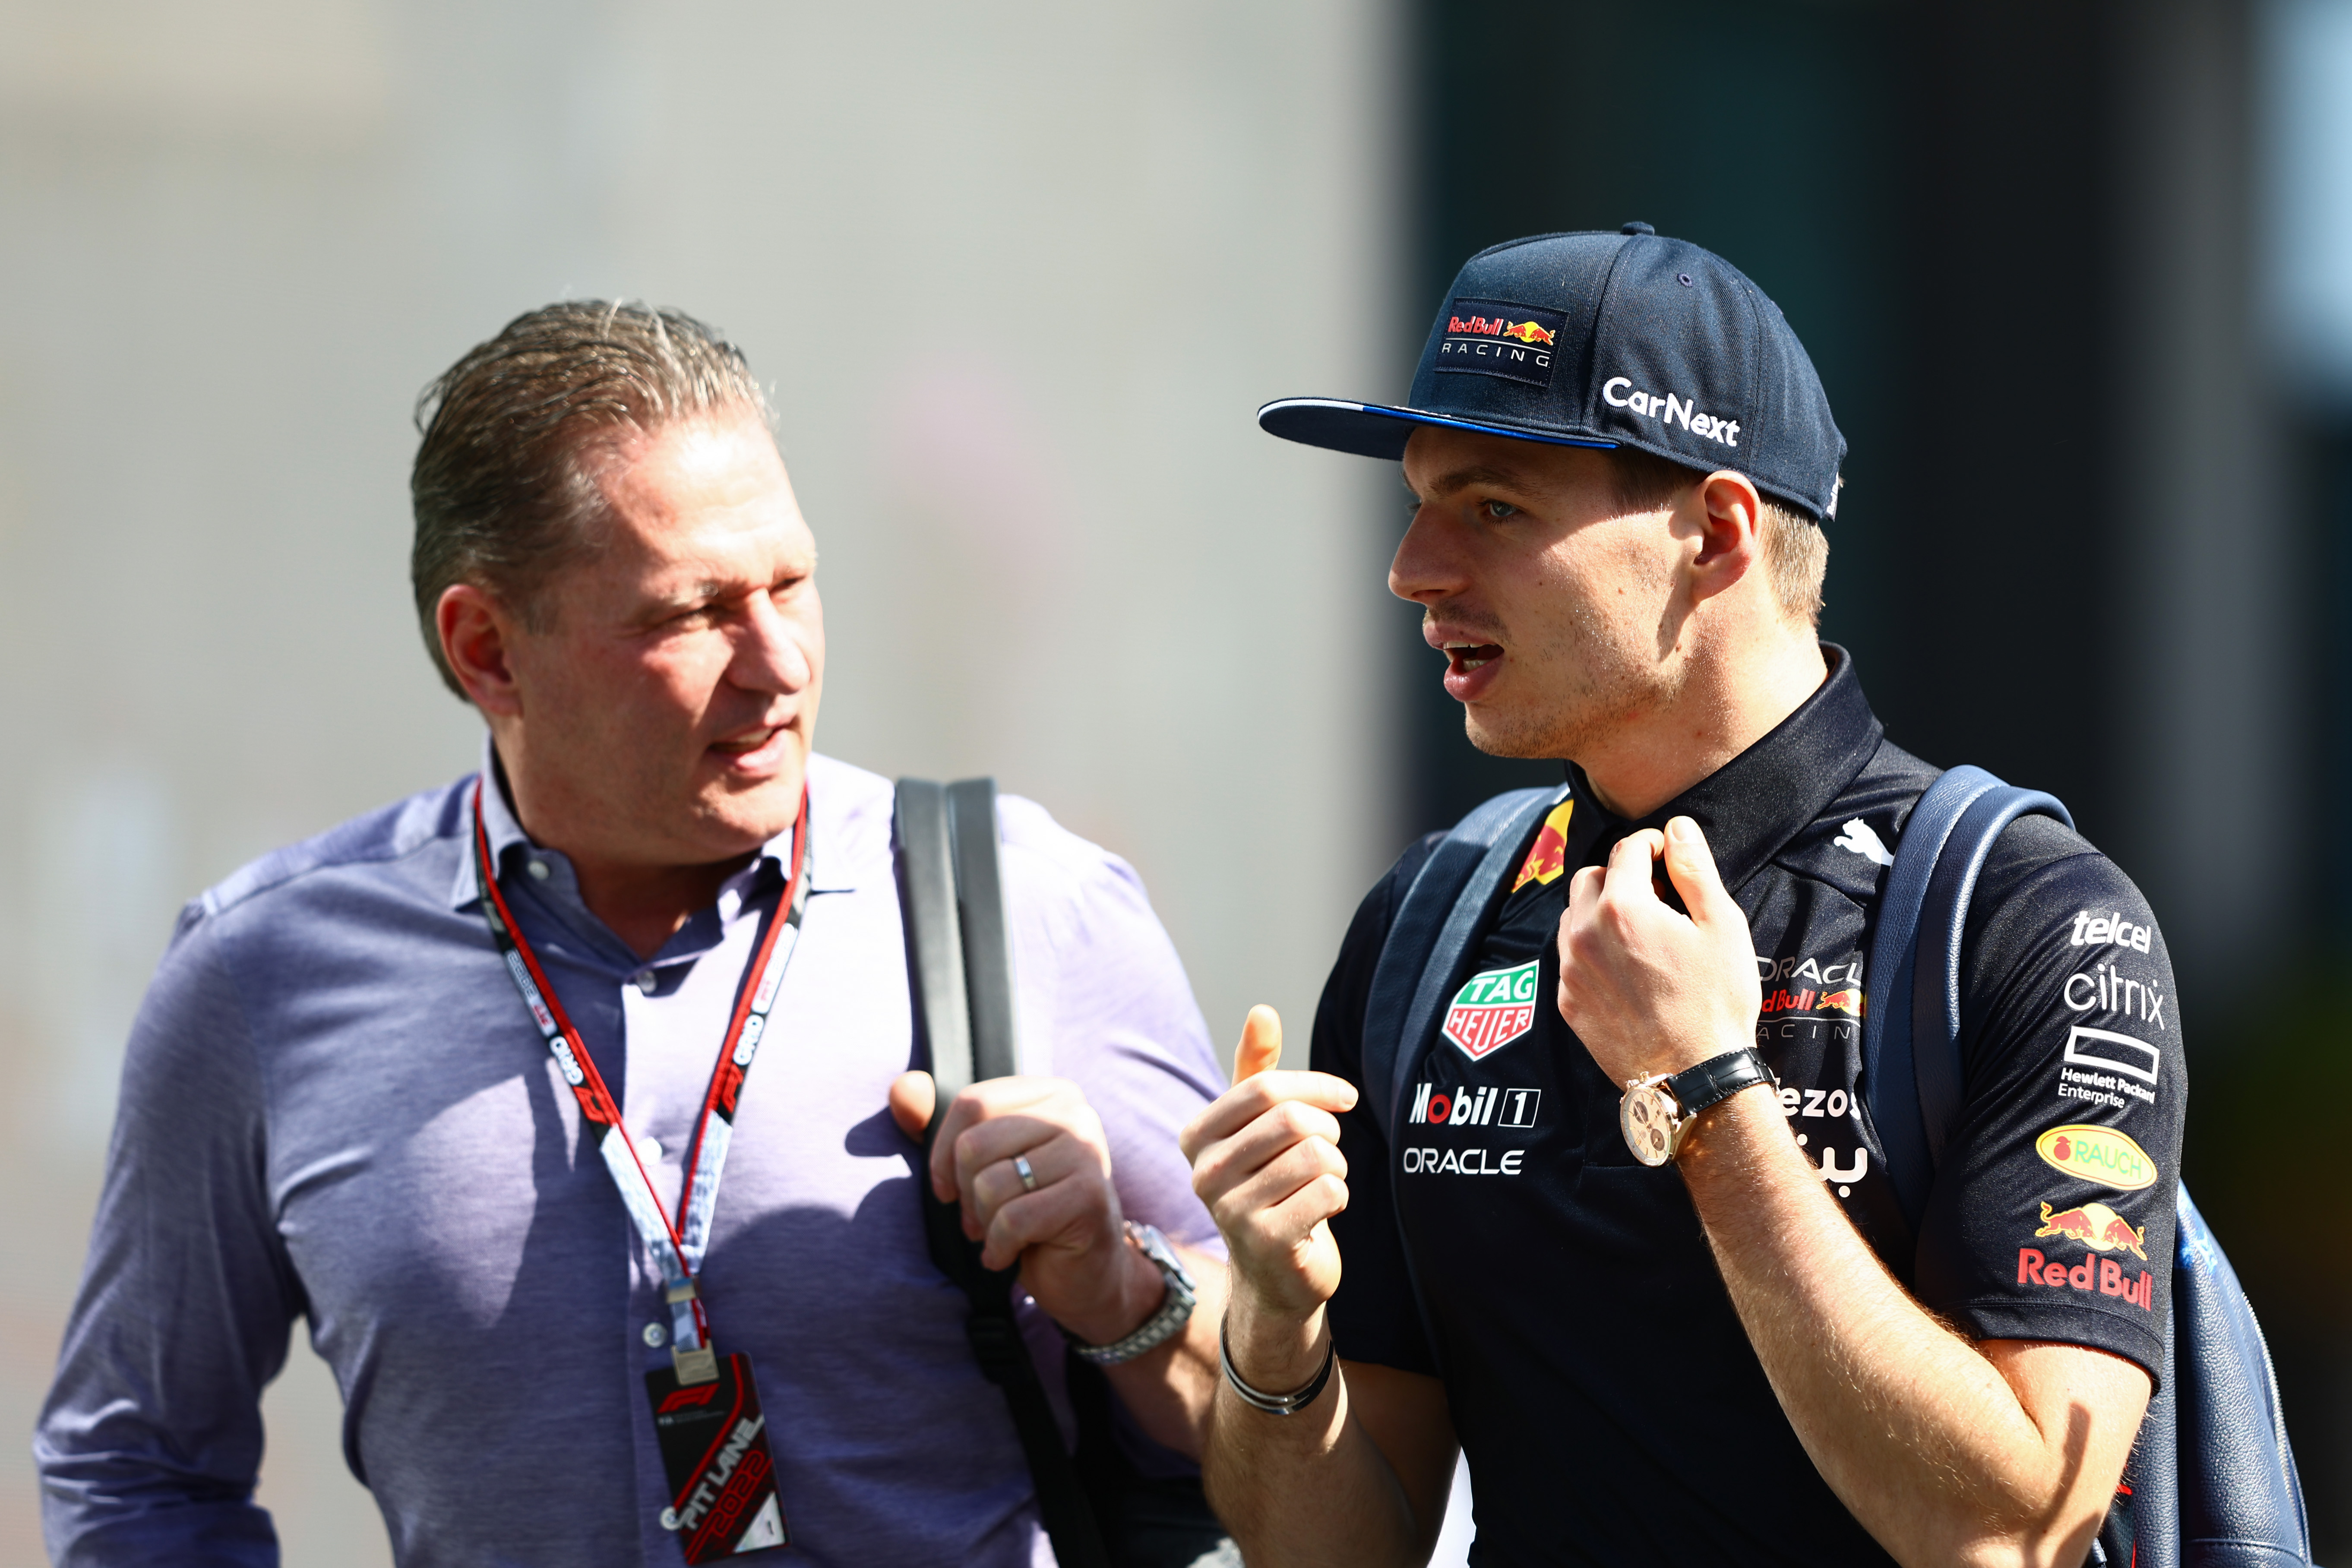 Jos Verstappen skrytykował postawę Red Bulla w Monako